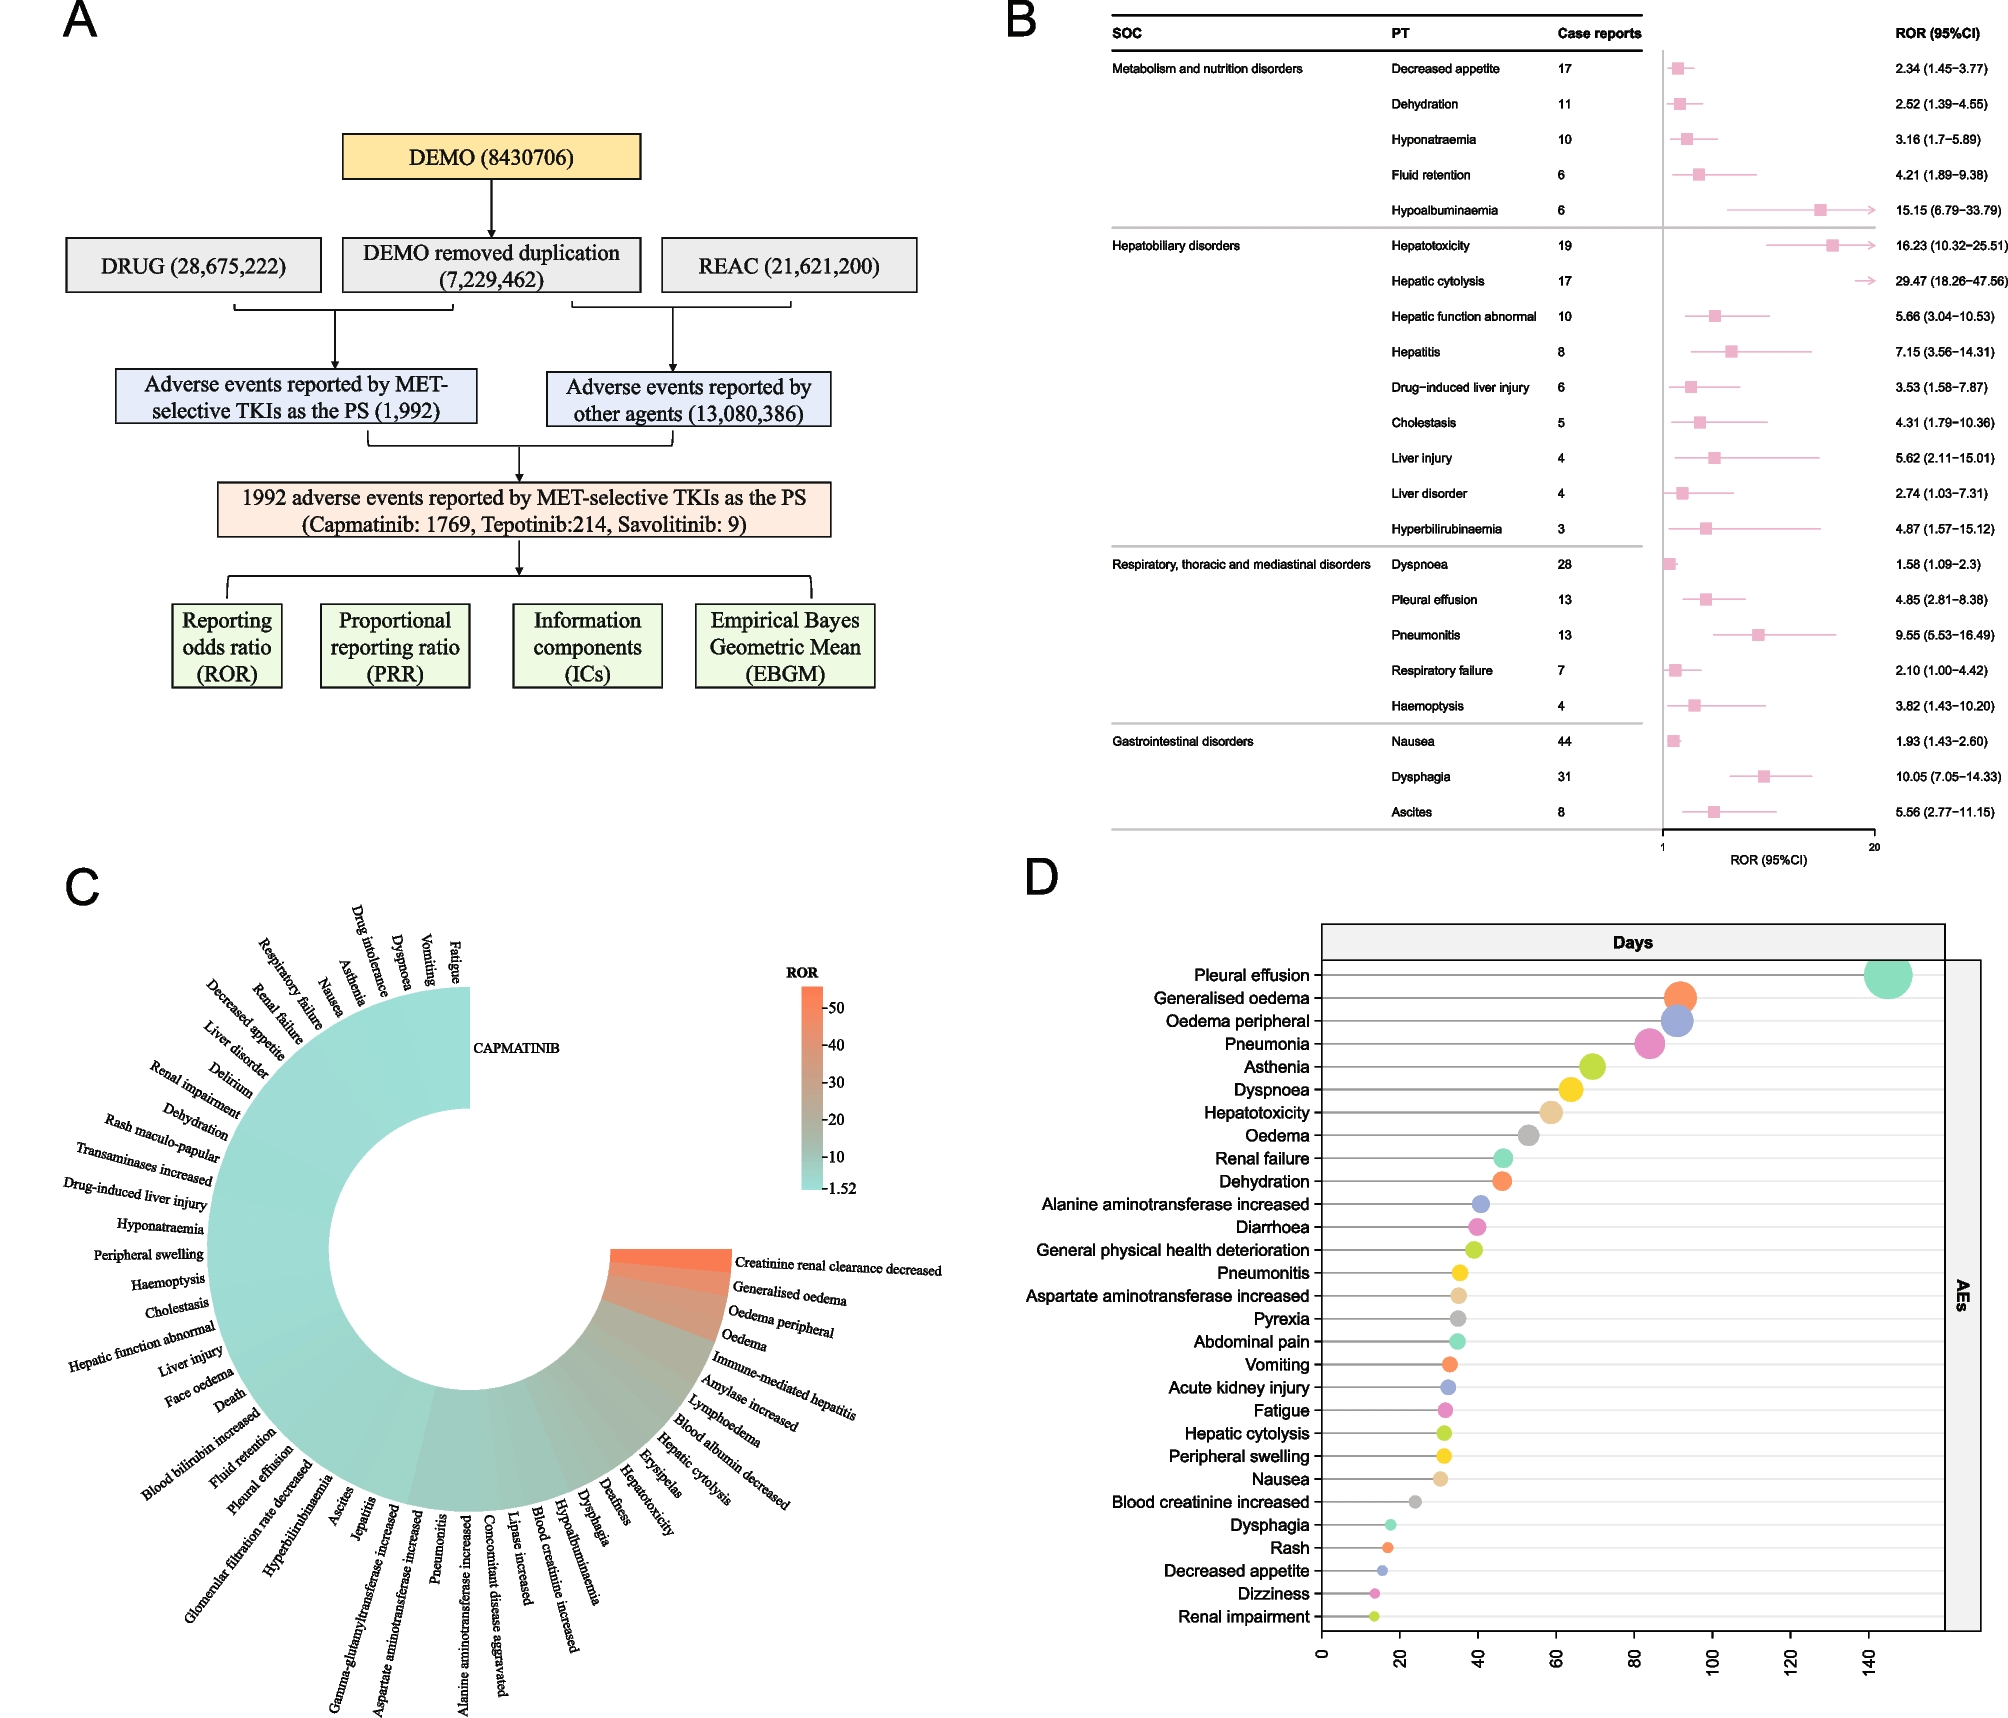 Toxicity burden patterns of MET-selective tyrosine kinase inhibitors: evidence from real-world pharmacovigilance